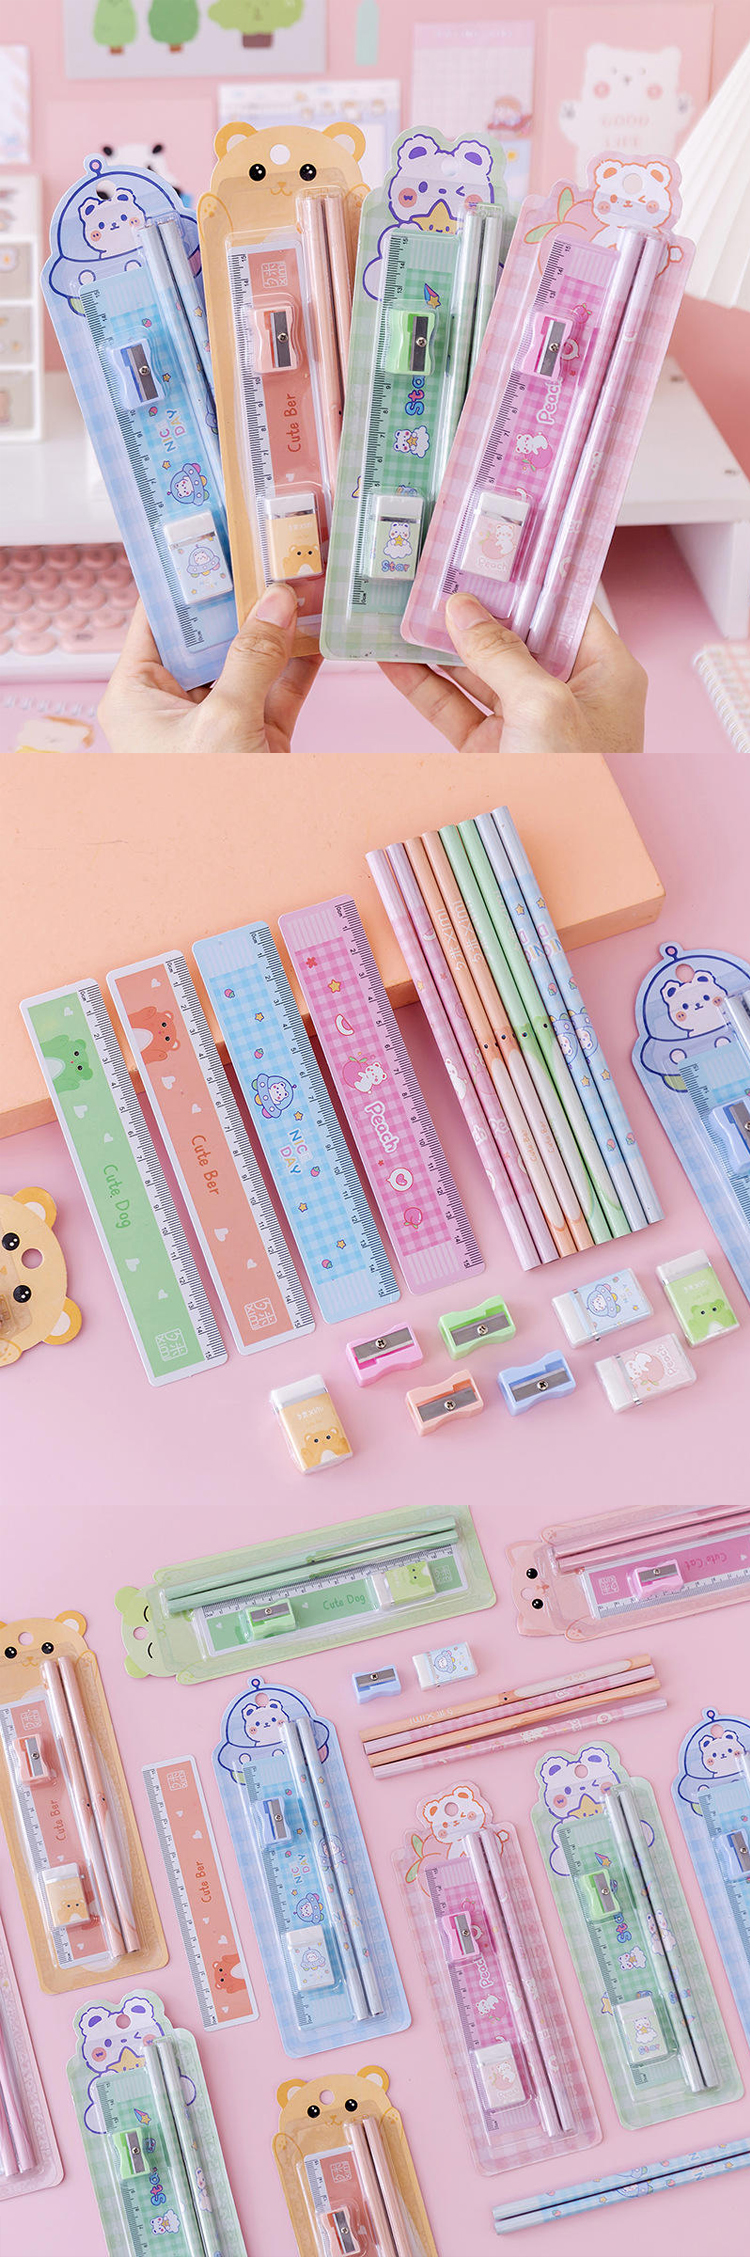 [5 sets]Creative stationery group animal cute cartoon pencil ruler